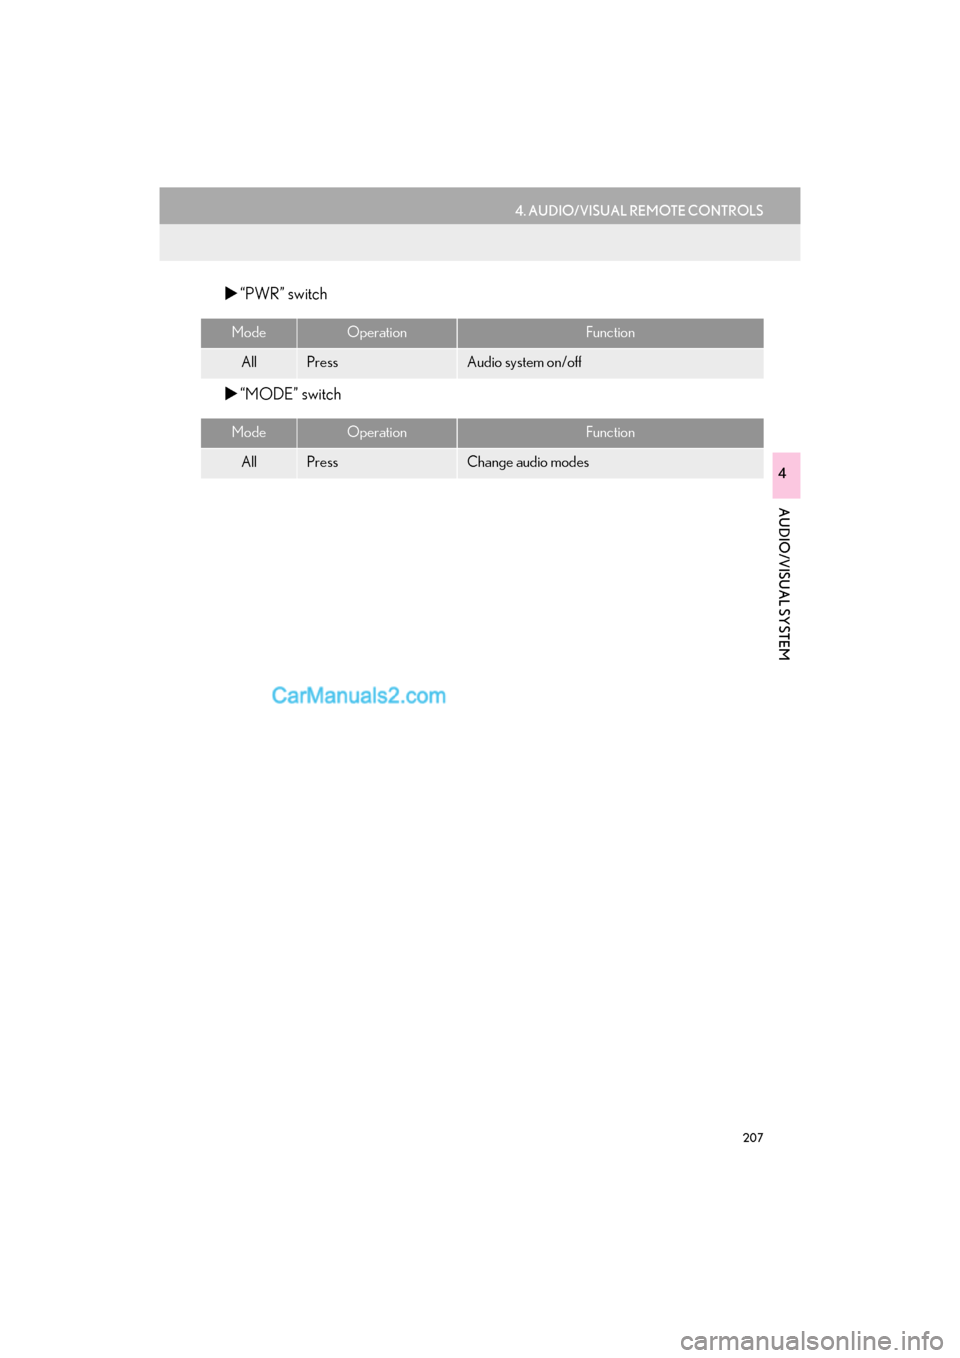 Lexus GS F 2016  Navigation Manual 207
4. AUDIO/VISUAL REMOTE CONTROLS
GS_Navi+MM_OM30F12U_(U)15.09.01     12:20
AUDIO/VISUAL SYSTEM
4
�X“PWR” switch
�X “MODE” switch
ModeOperationFunction
AllPressAudio system on/off
ModeOperat